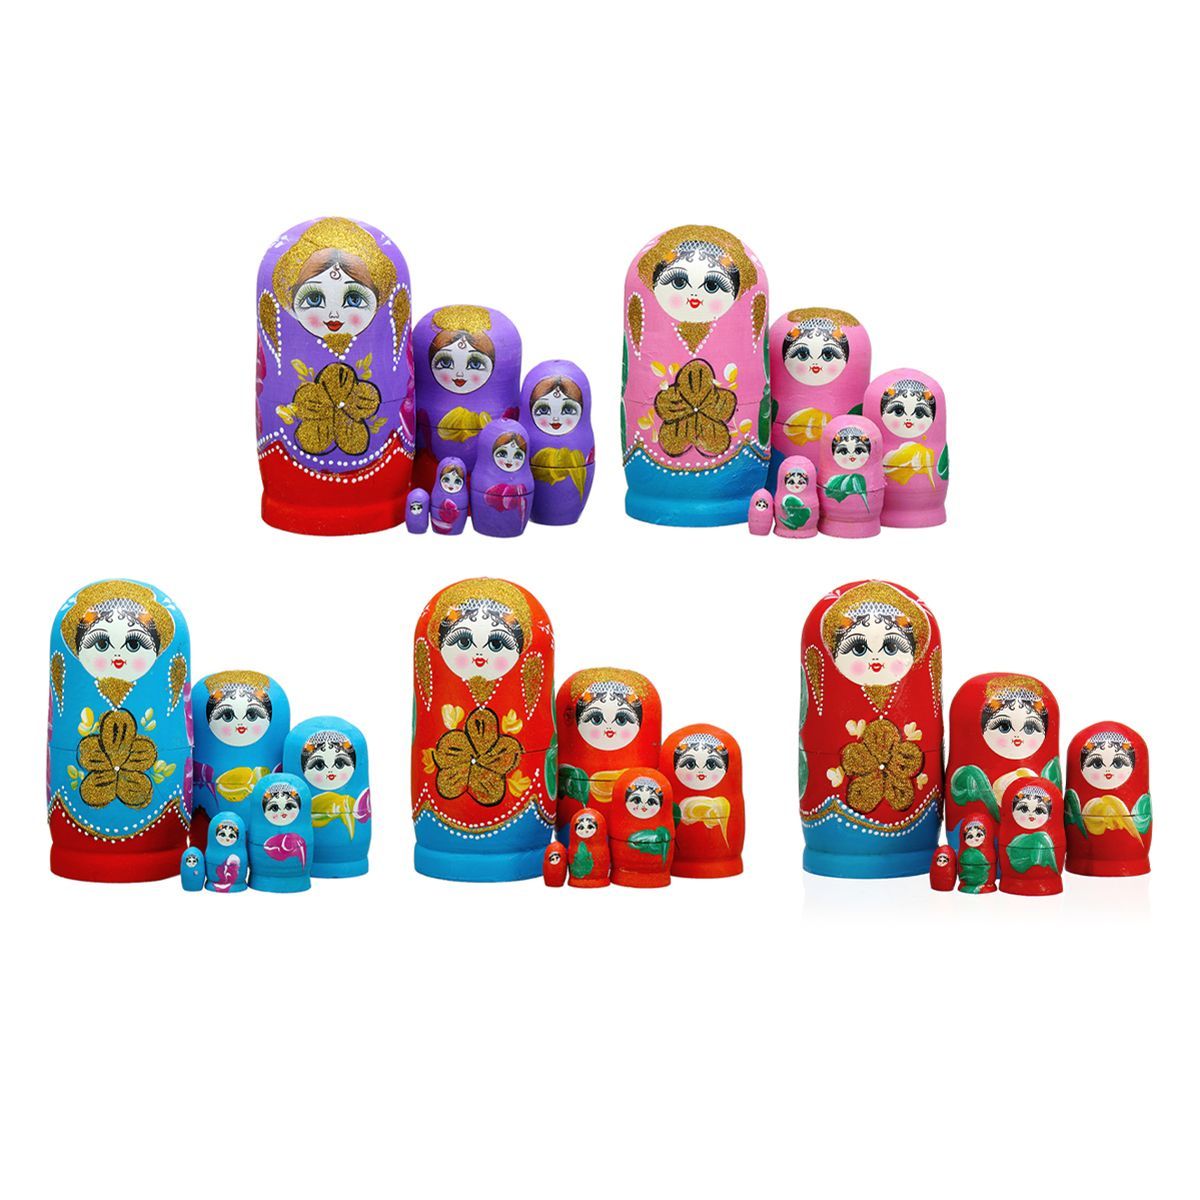 6PcsSet-Russian-Nesting-Dolls-Hand-Painted-Matryoshka-Babushka-Kids-Toy-Gift-Decorations-1555221